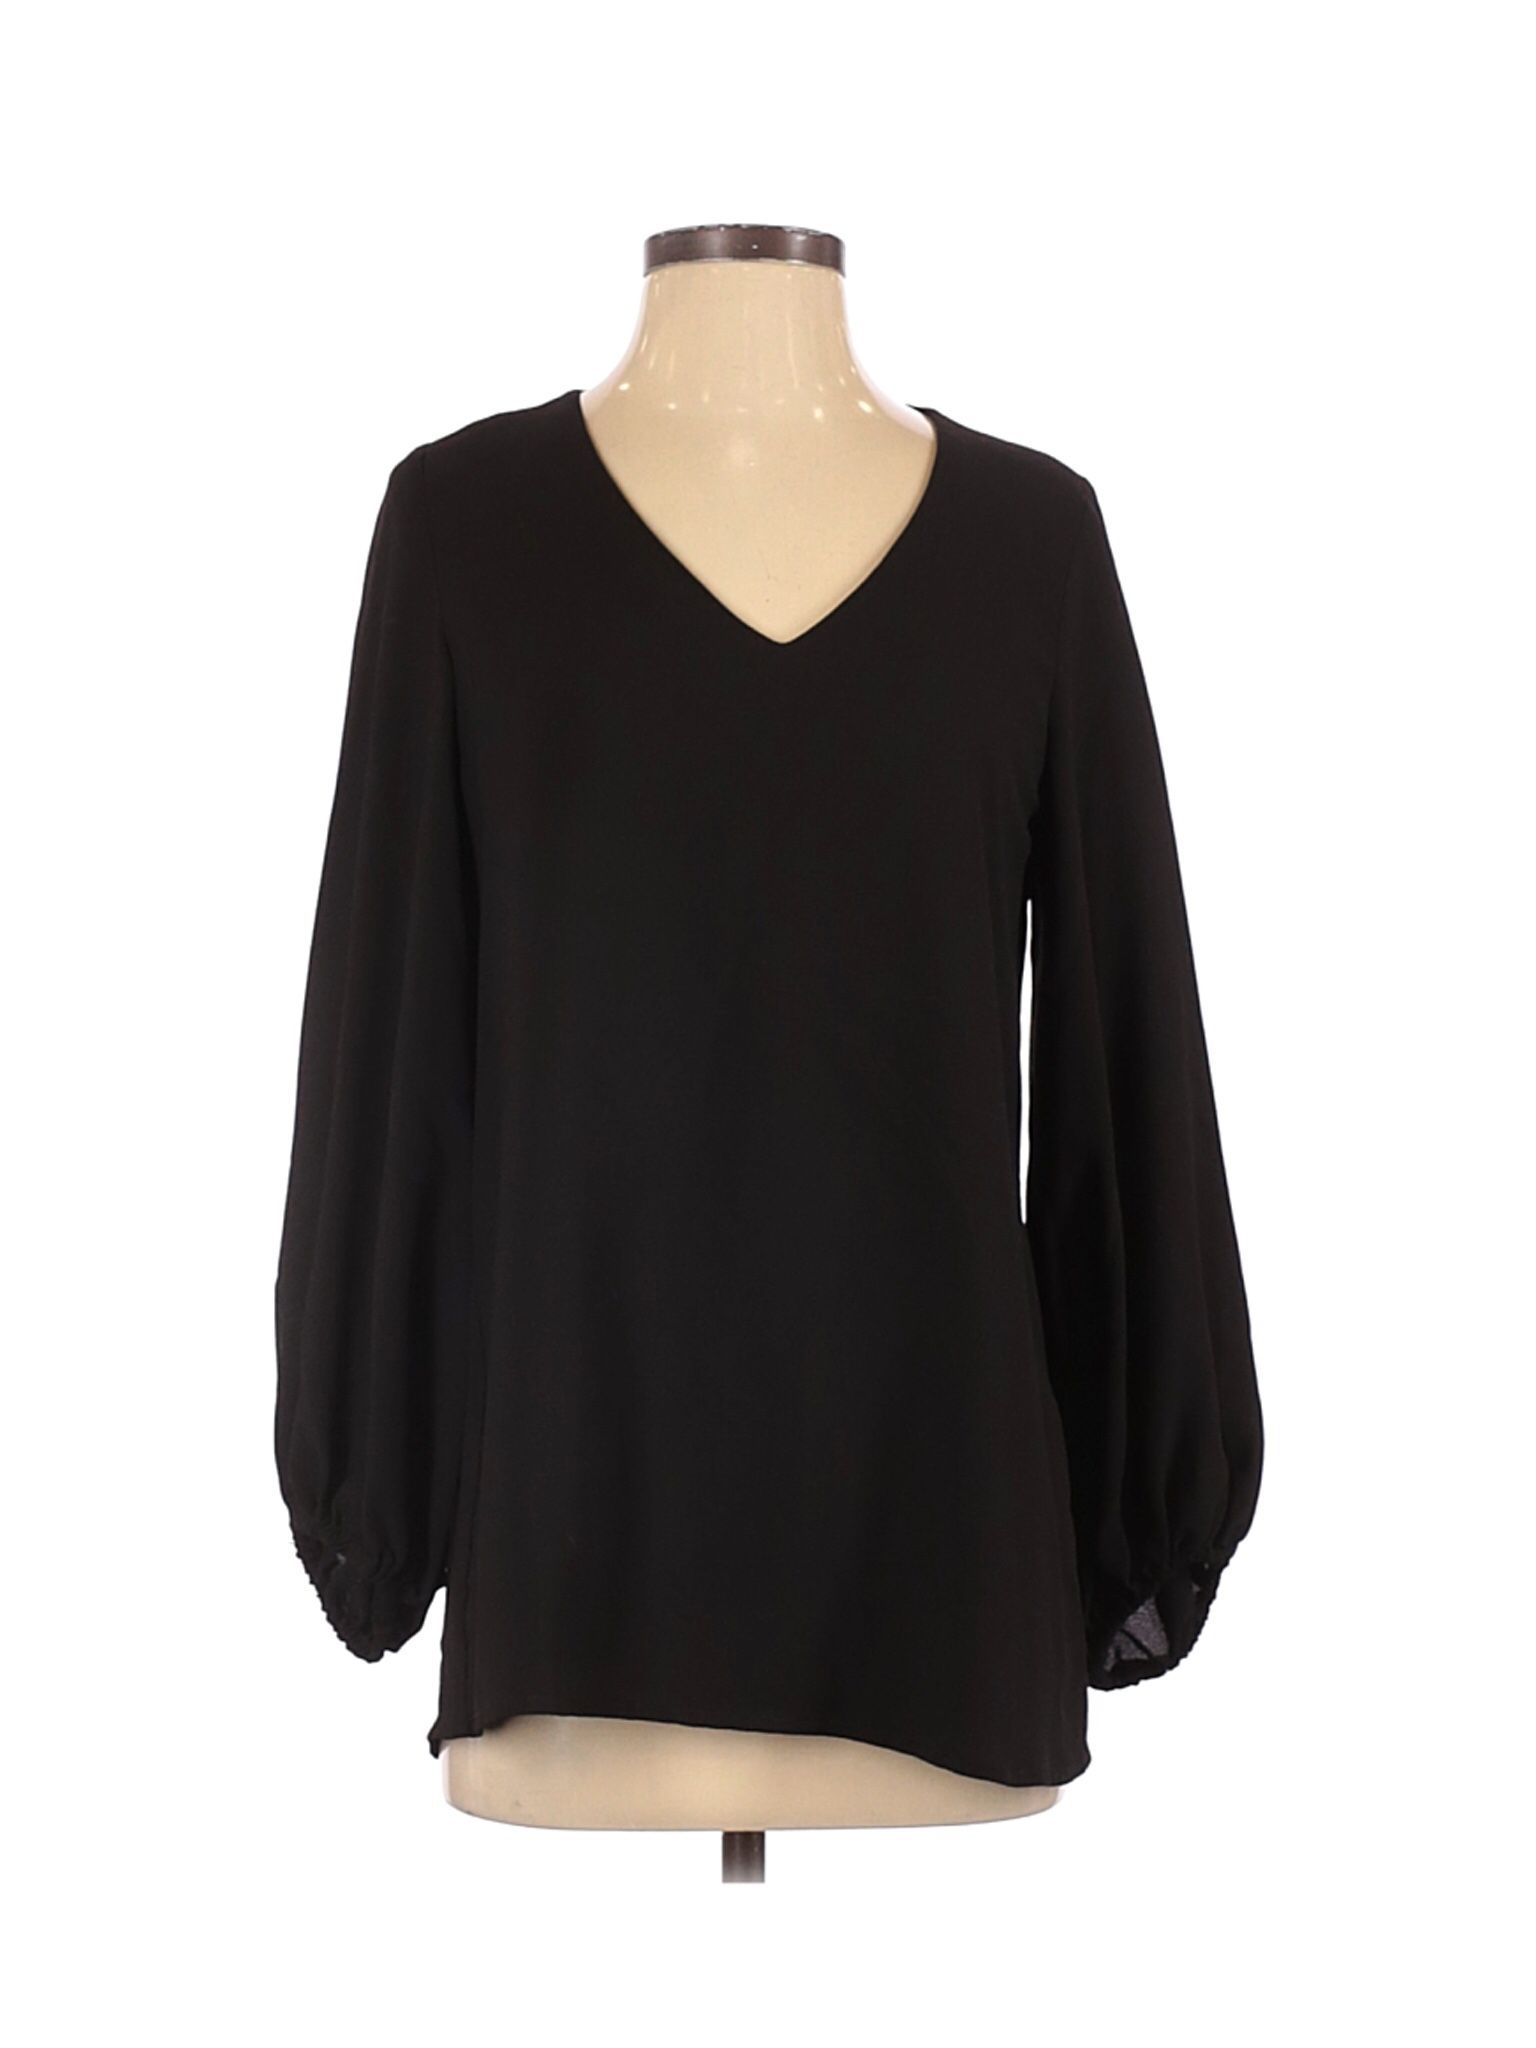 BELONGSCI Women's Casual Loose Shirt Balloon Sleeve V-Neck Blouse Top, Black, L